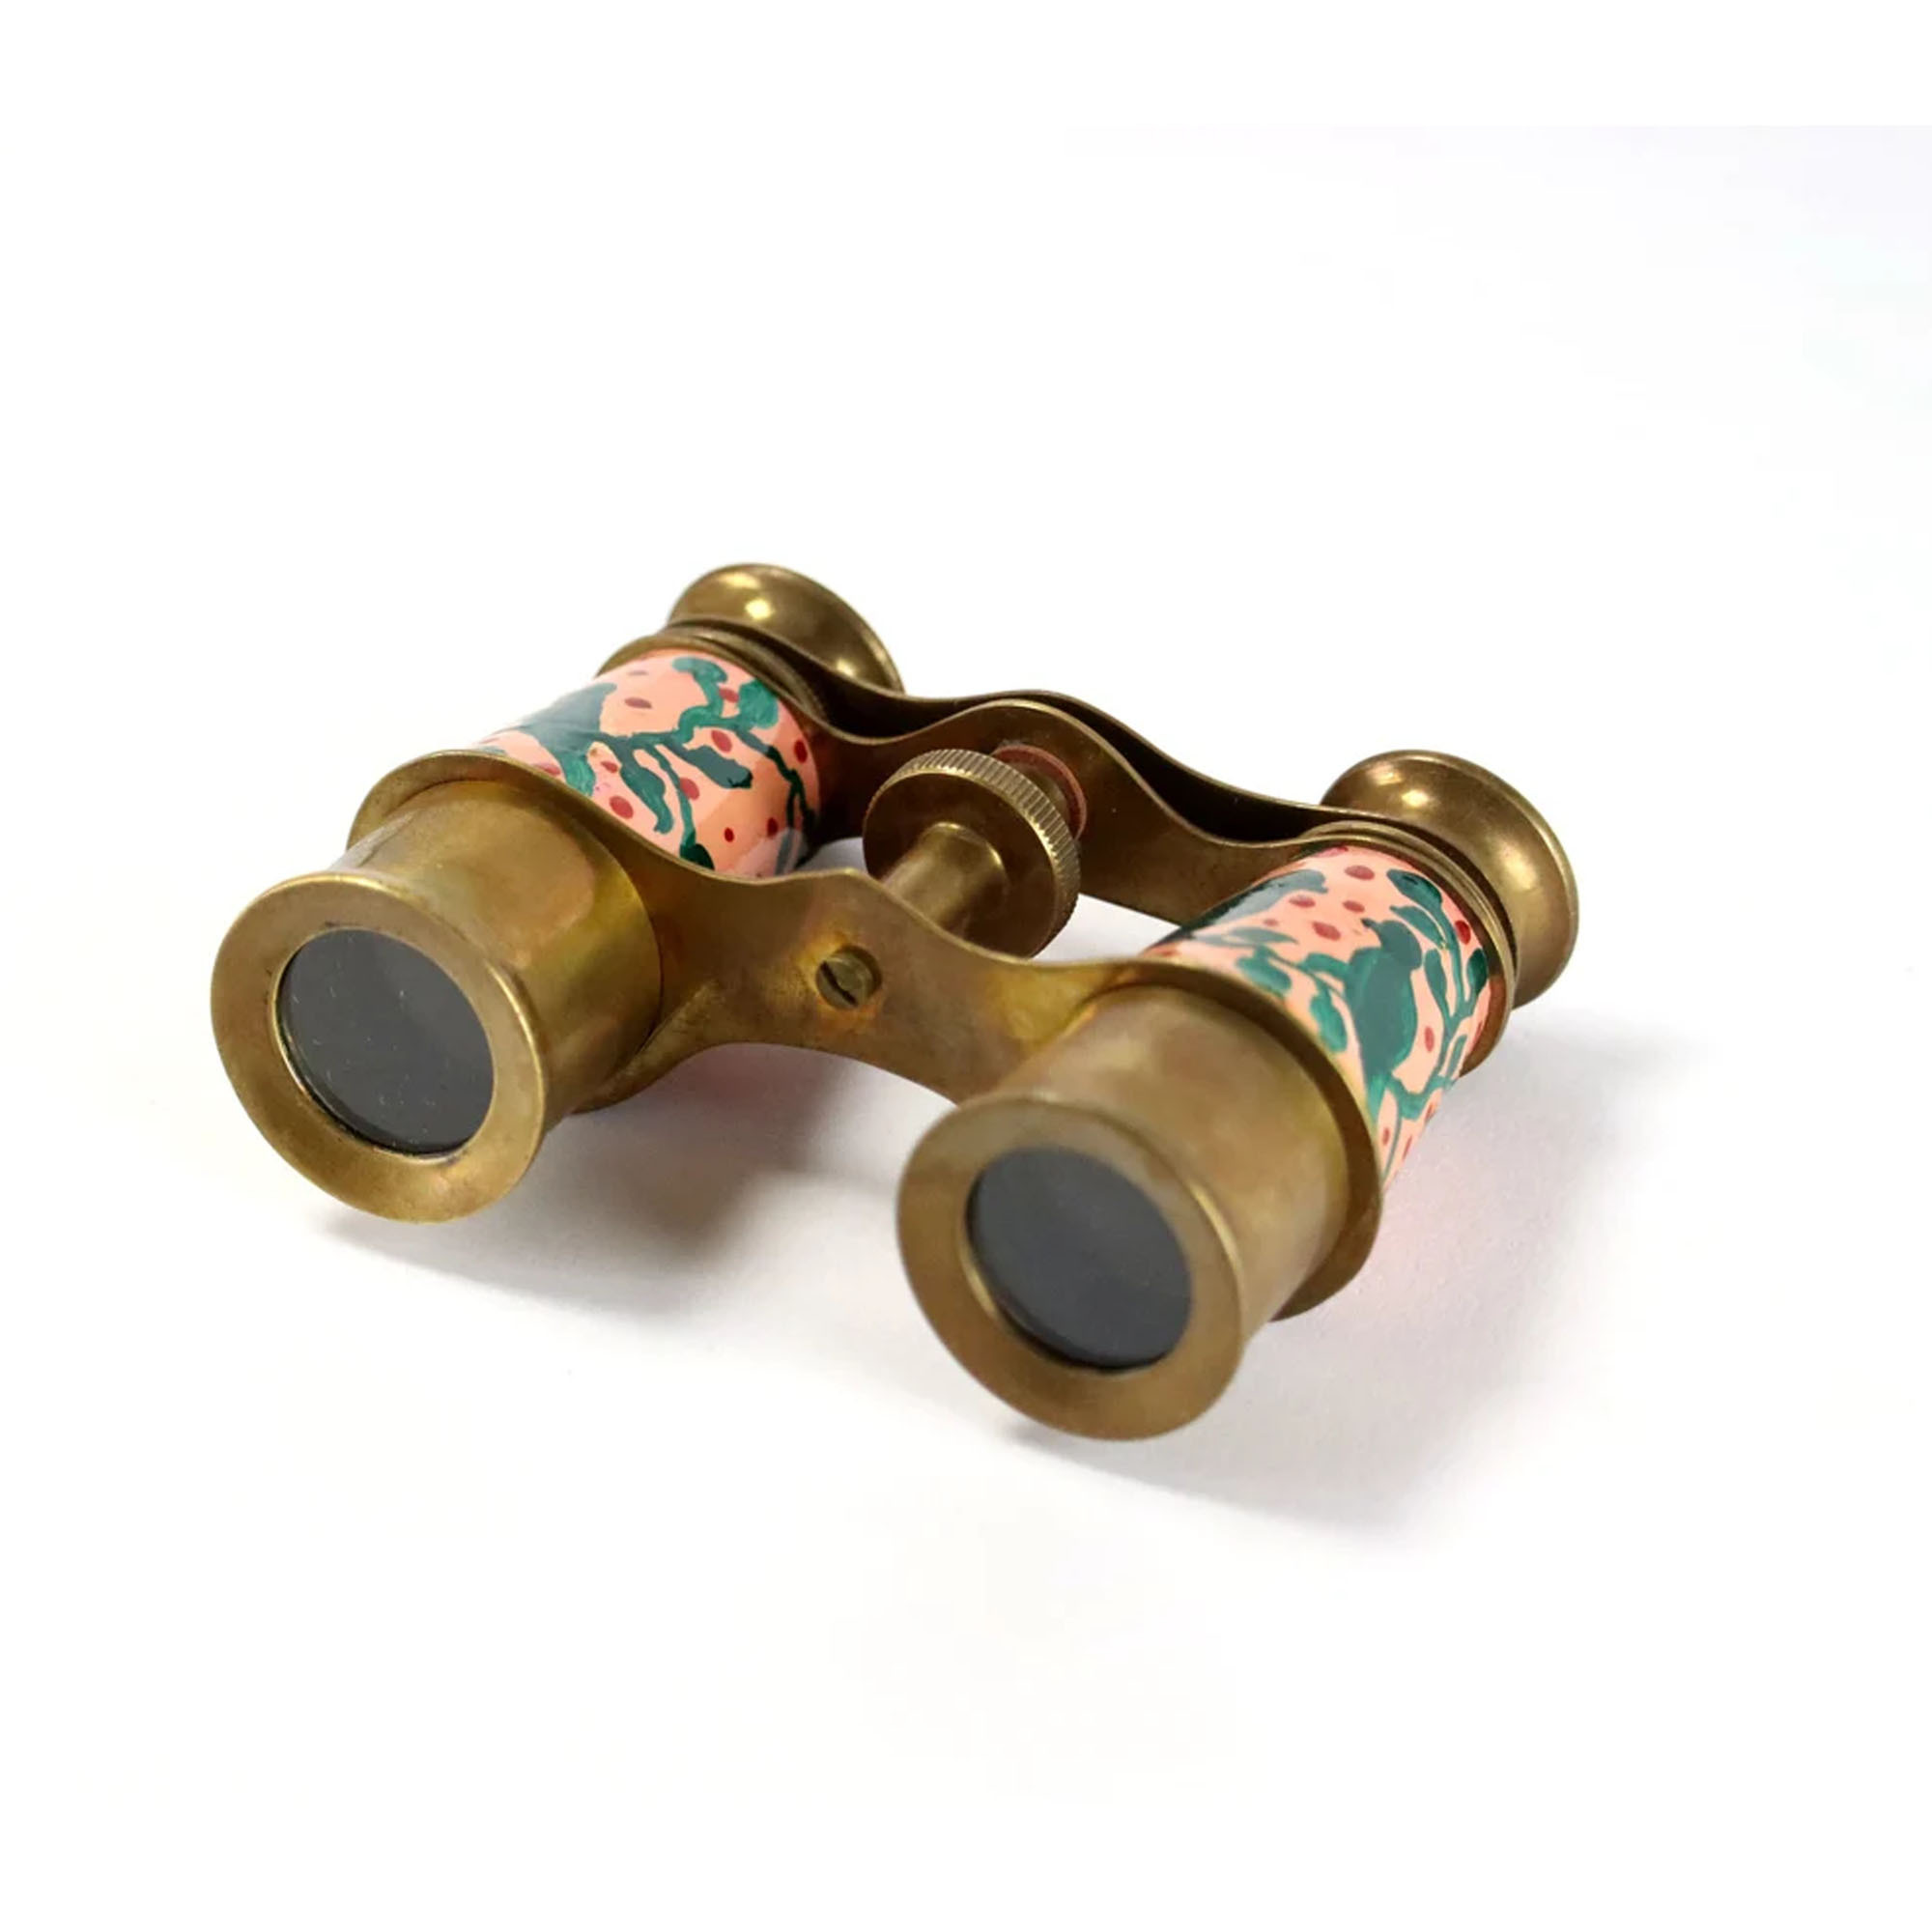 Birds Design Binoculars Antique Brass Binocular With Leather Case Antique Binocular